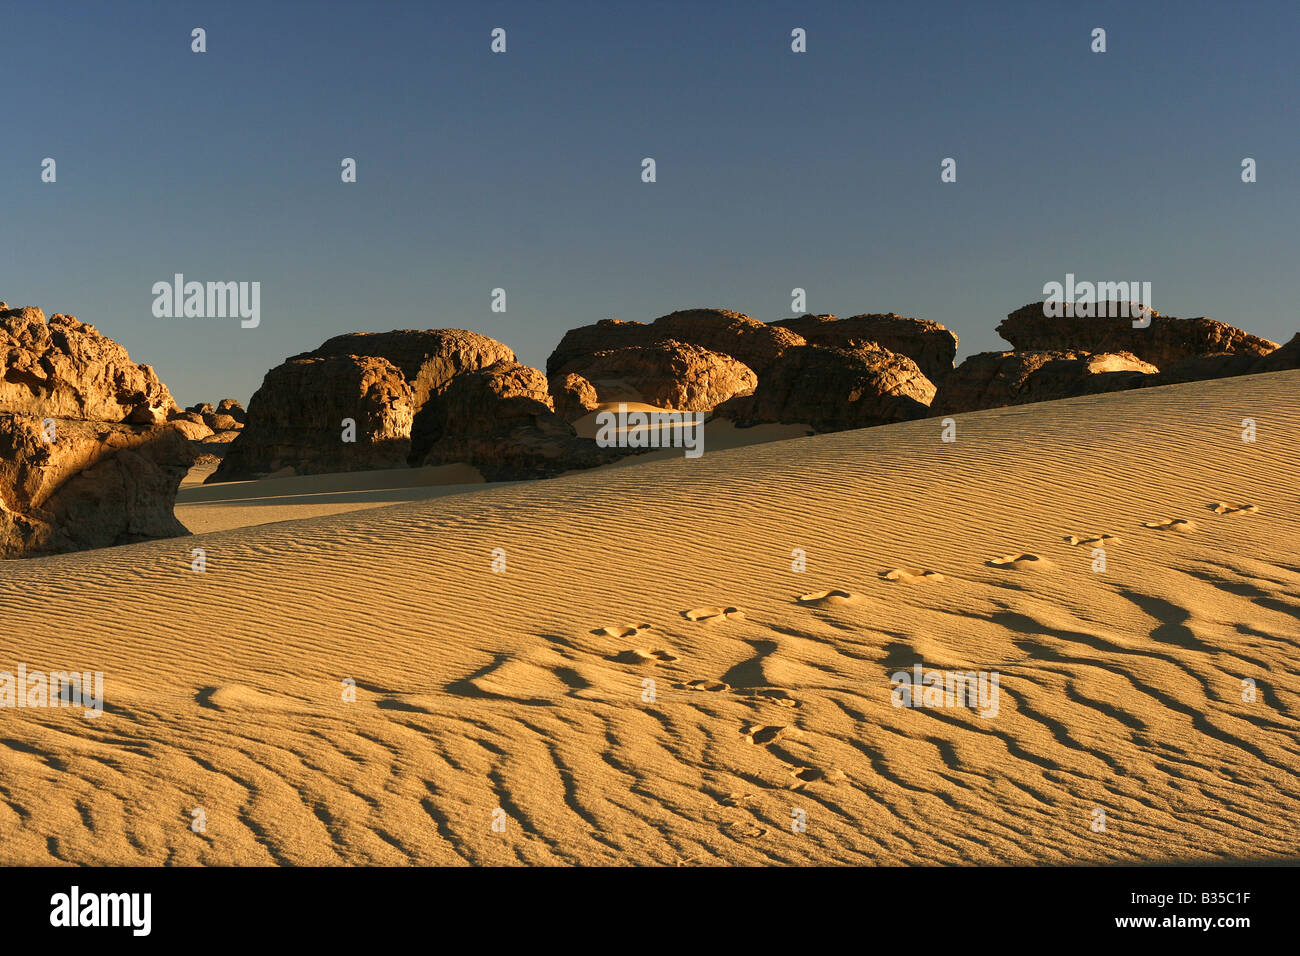 In Tehog Tassili Ahaggar Sahara desert Algeria Stock Photo - Alamy